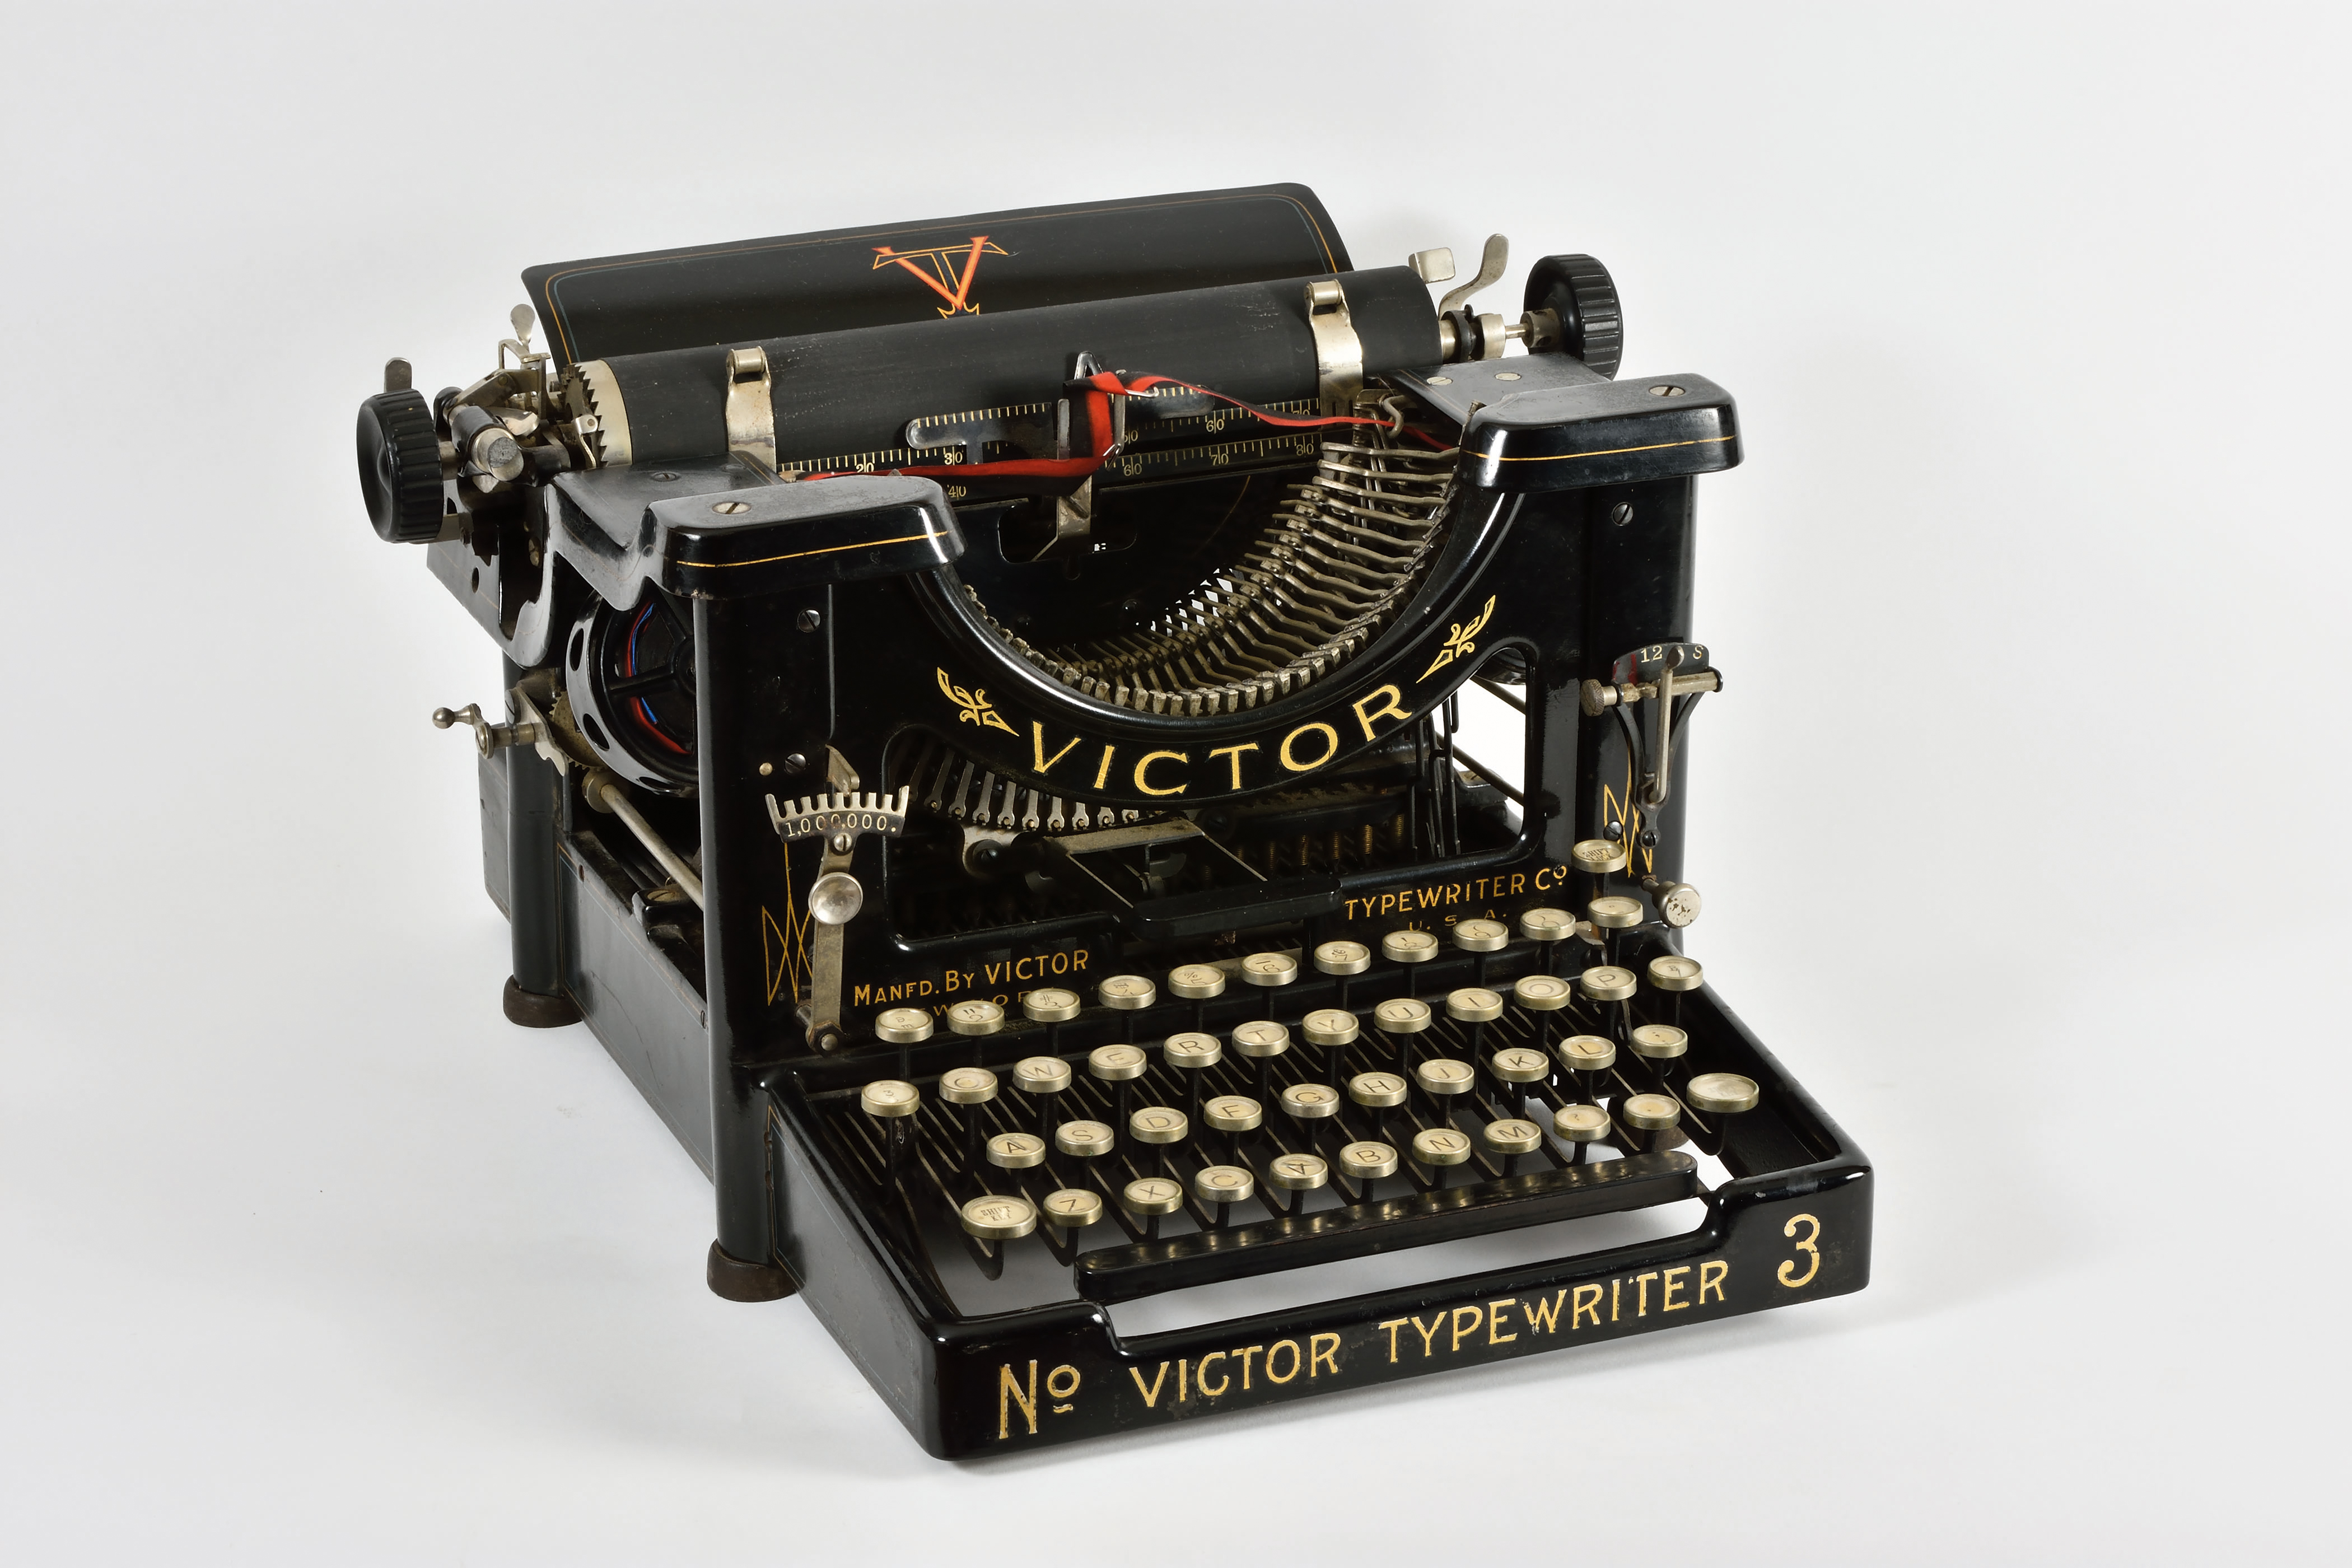 The Victor typewriter 